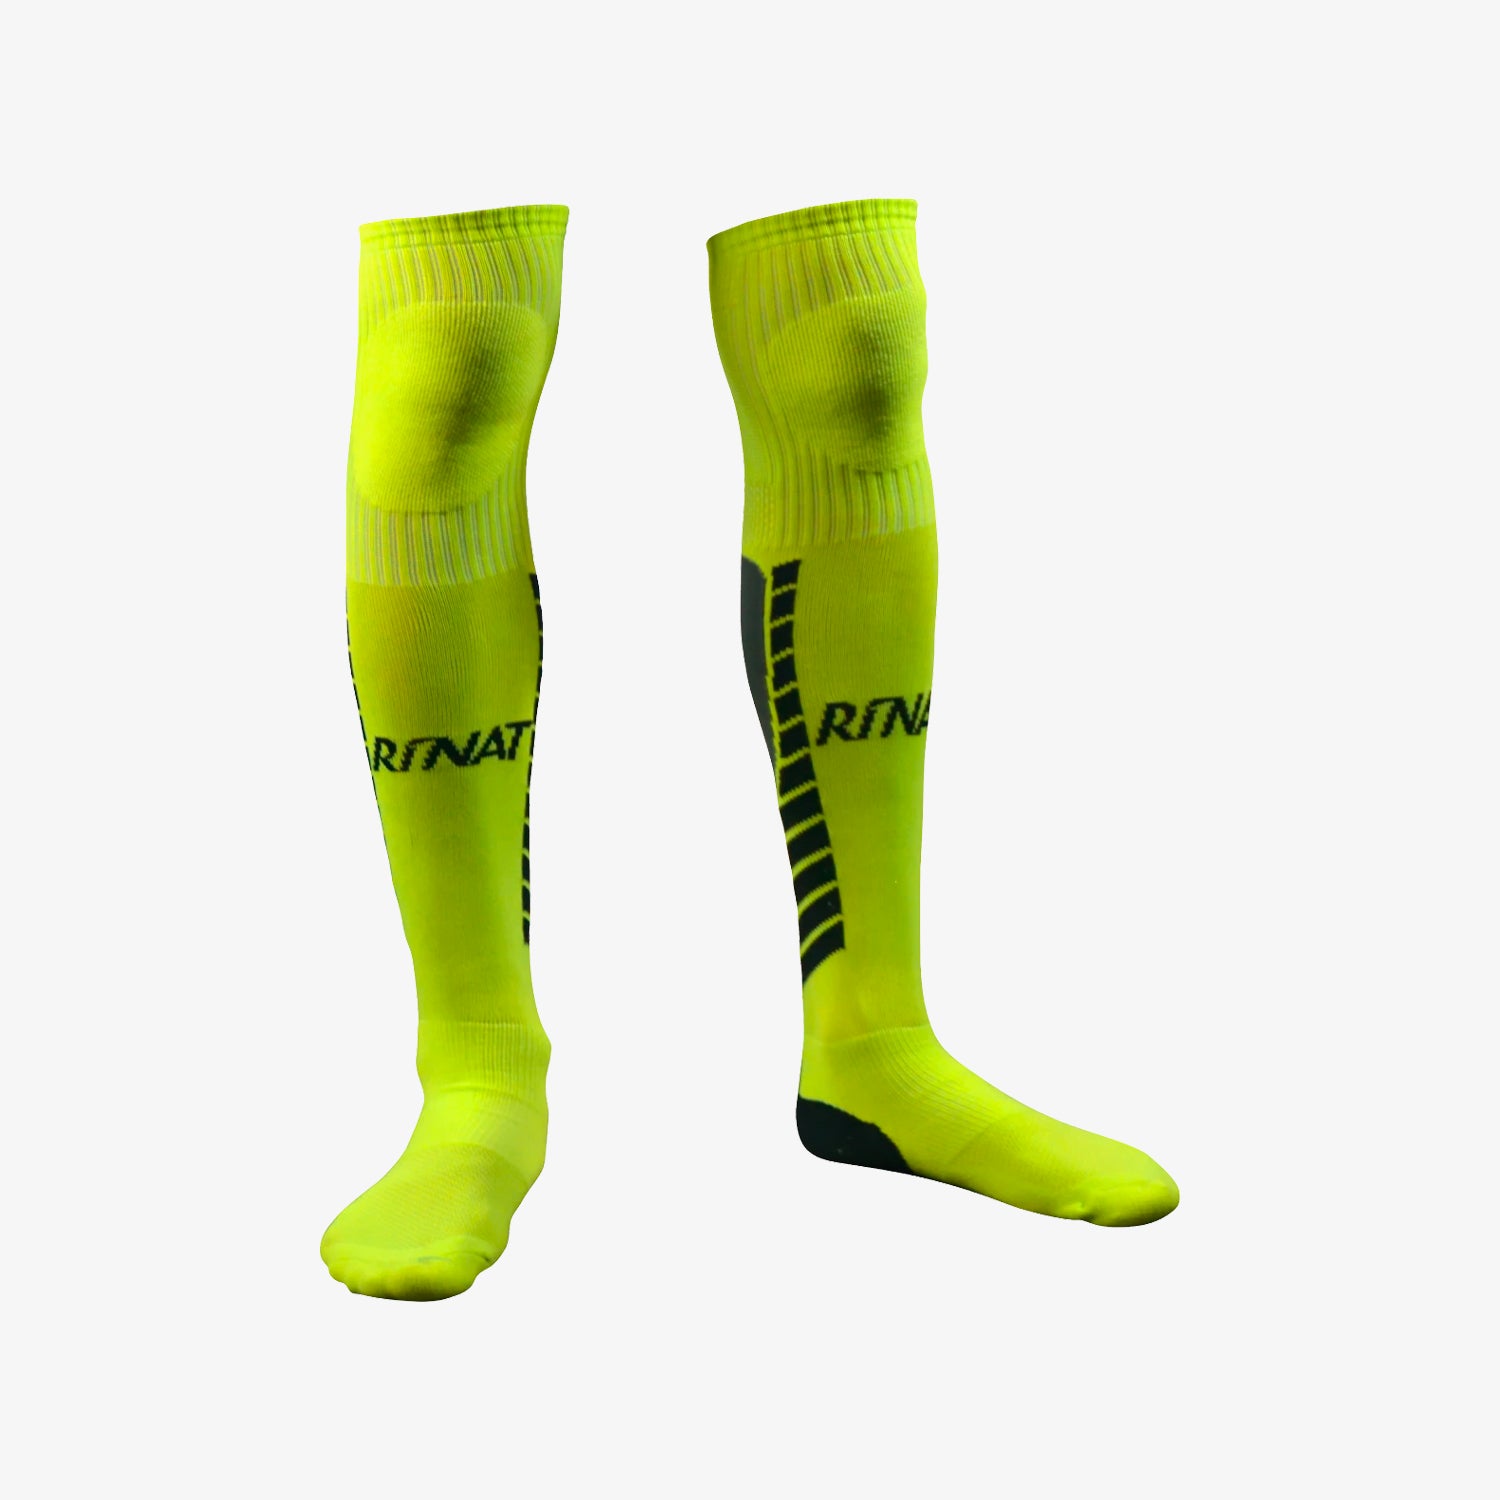 yellow nike soccer socks